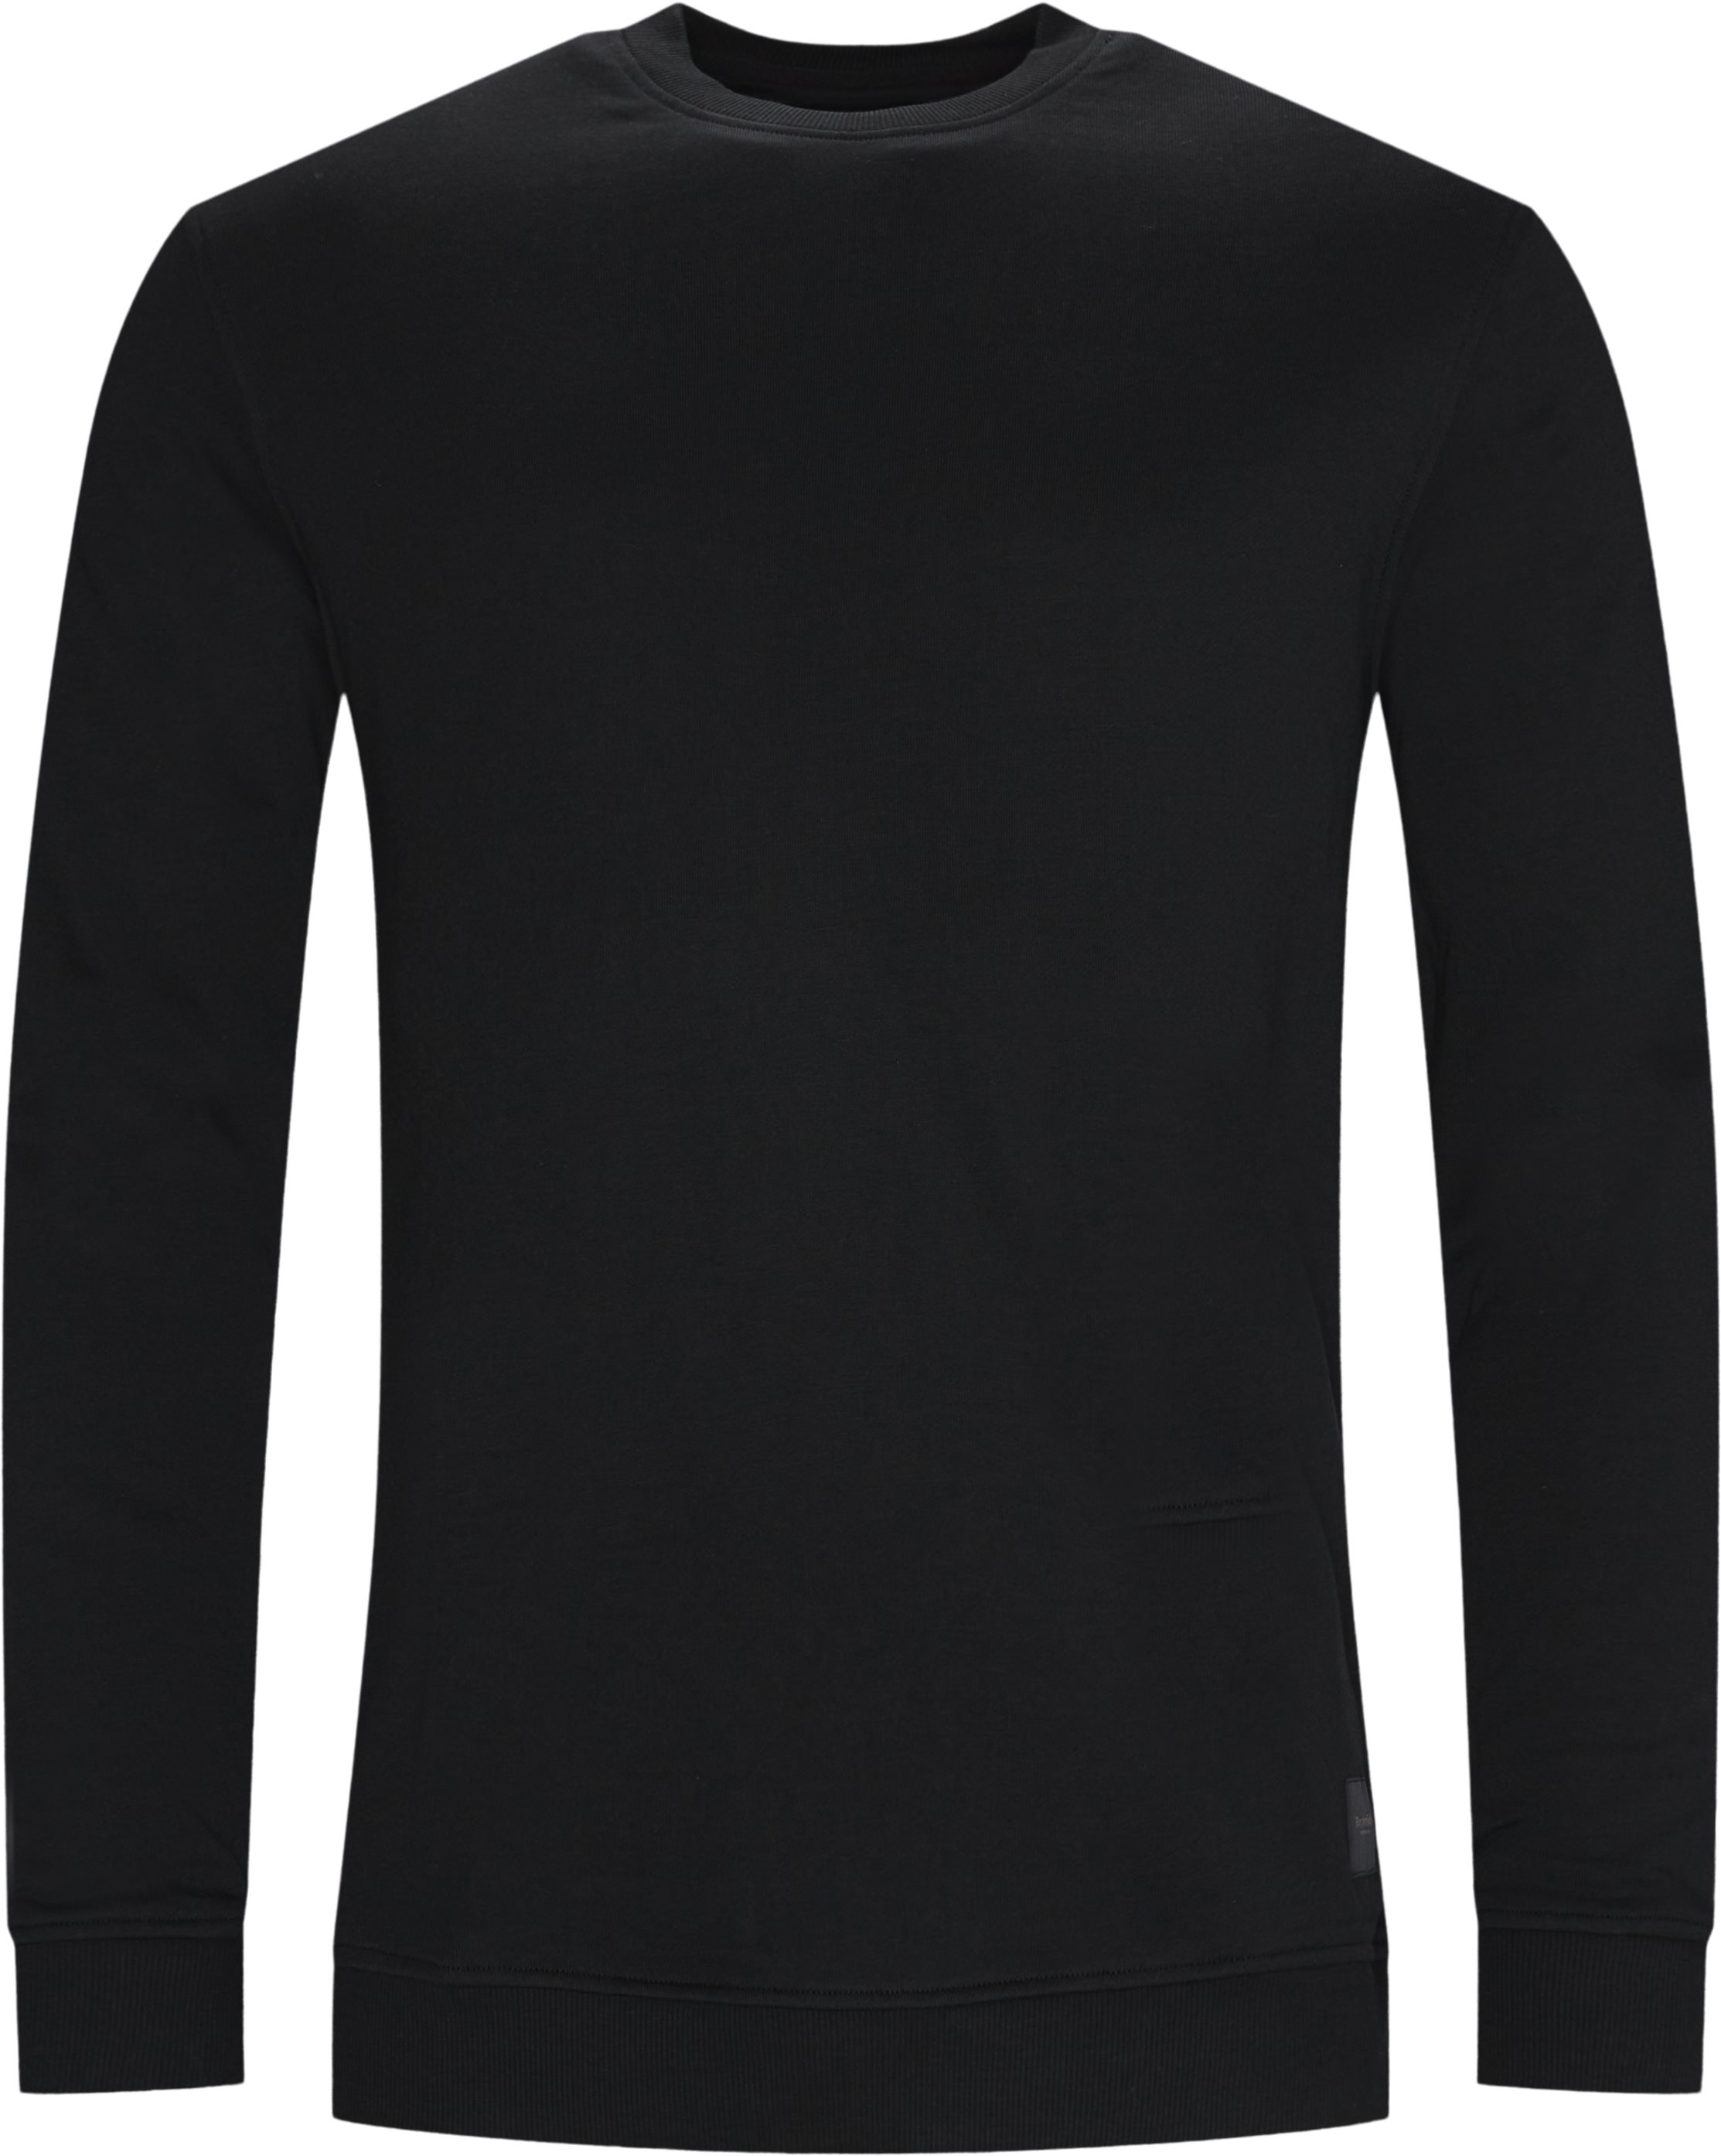 BAMBOO Tröja - Sweatshirts - Regular fit - Svart